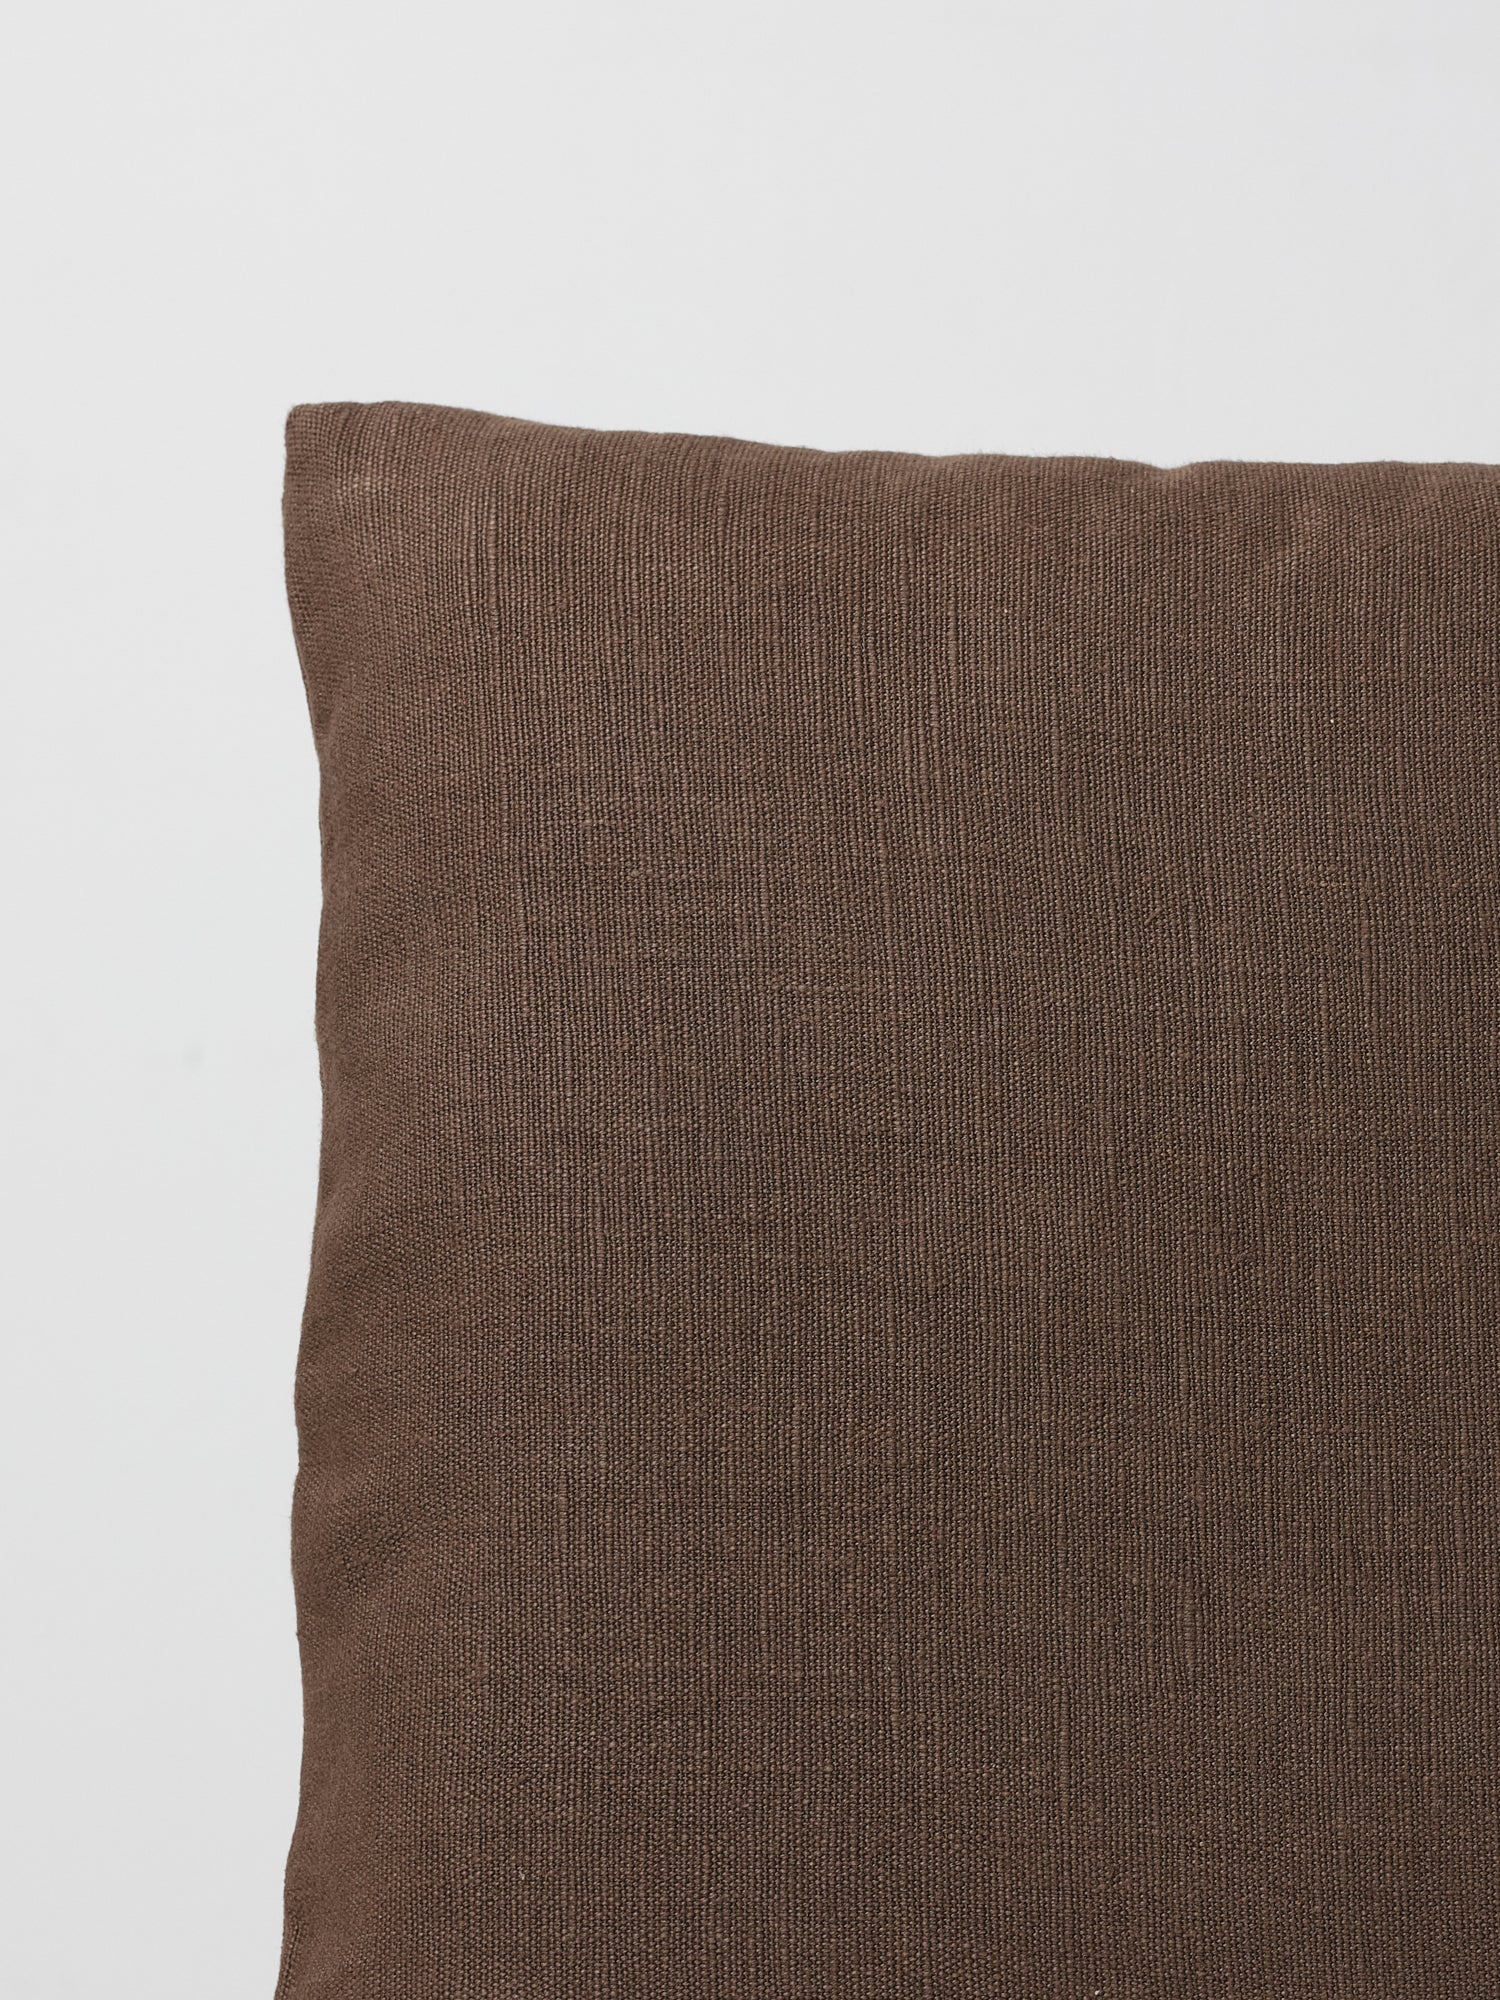 Cushion Fabric Samples